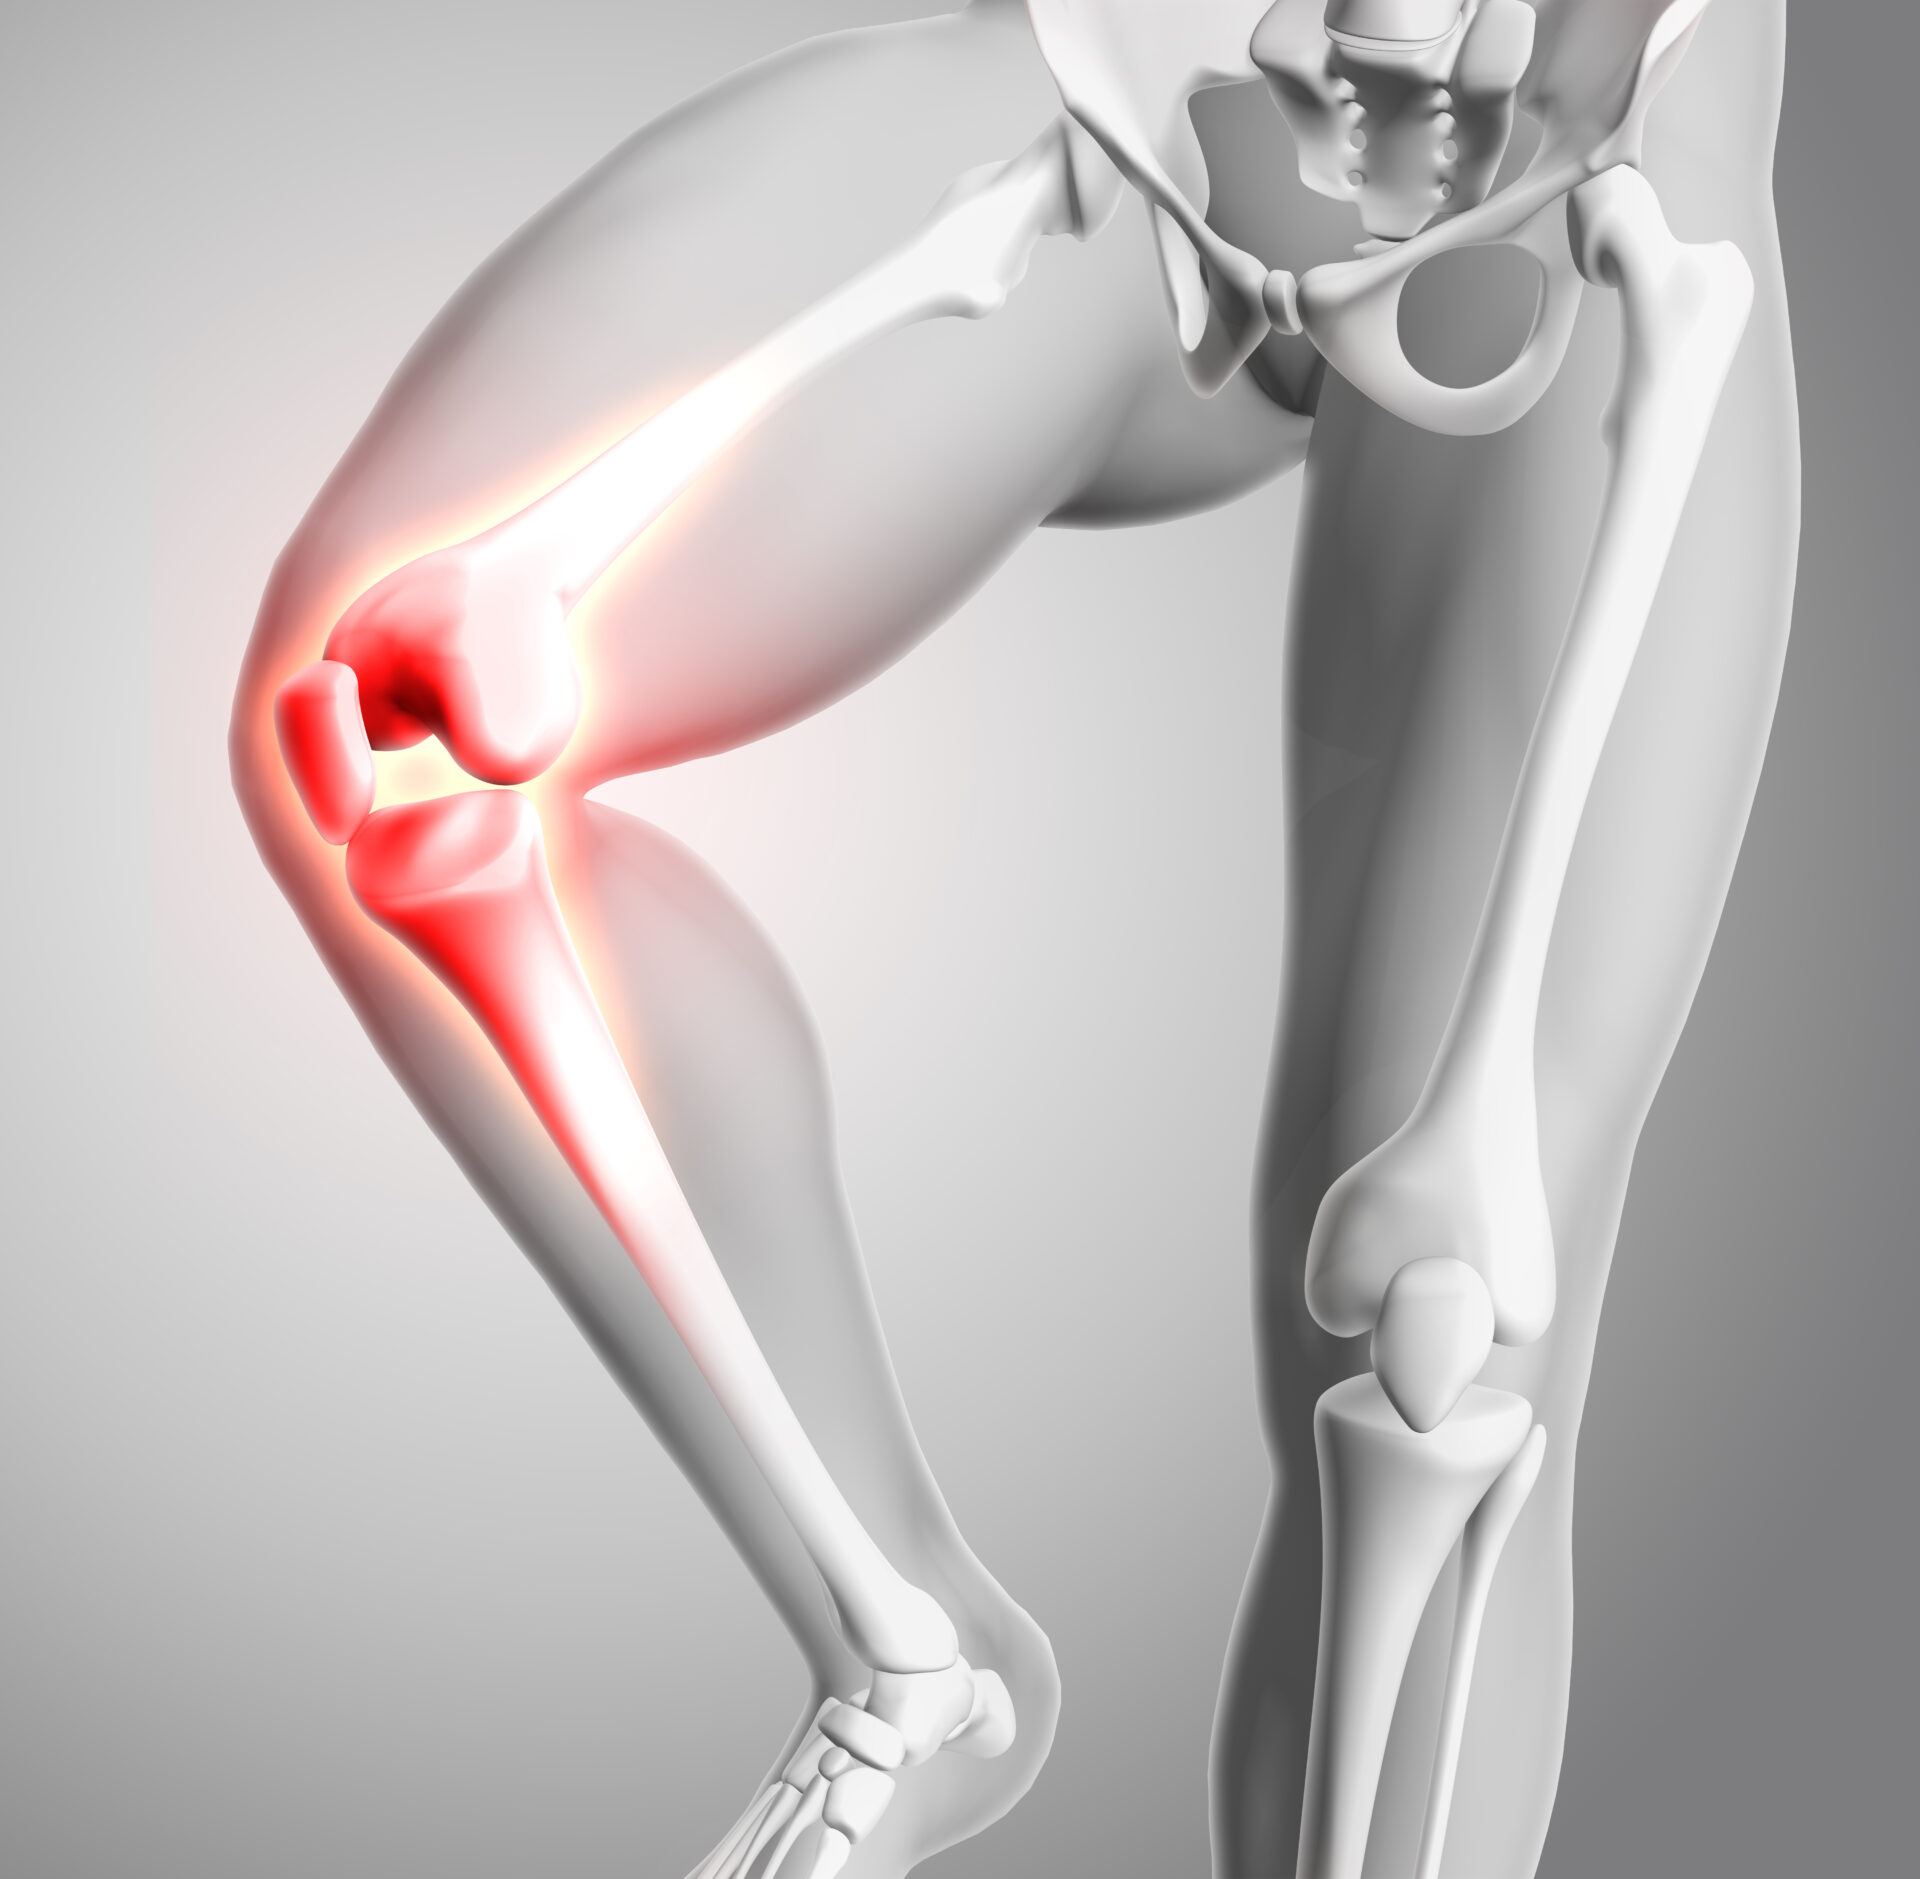 knee sprain